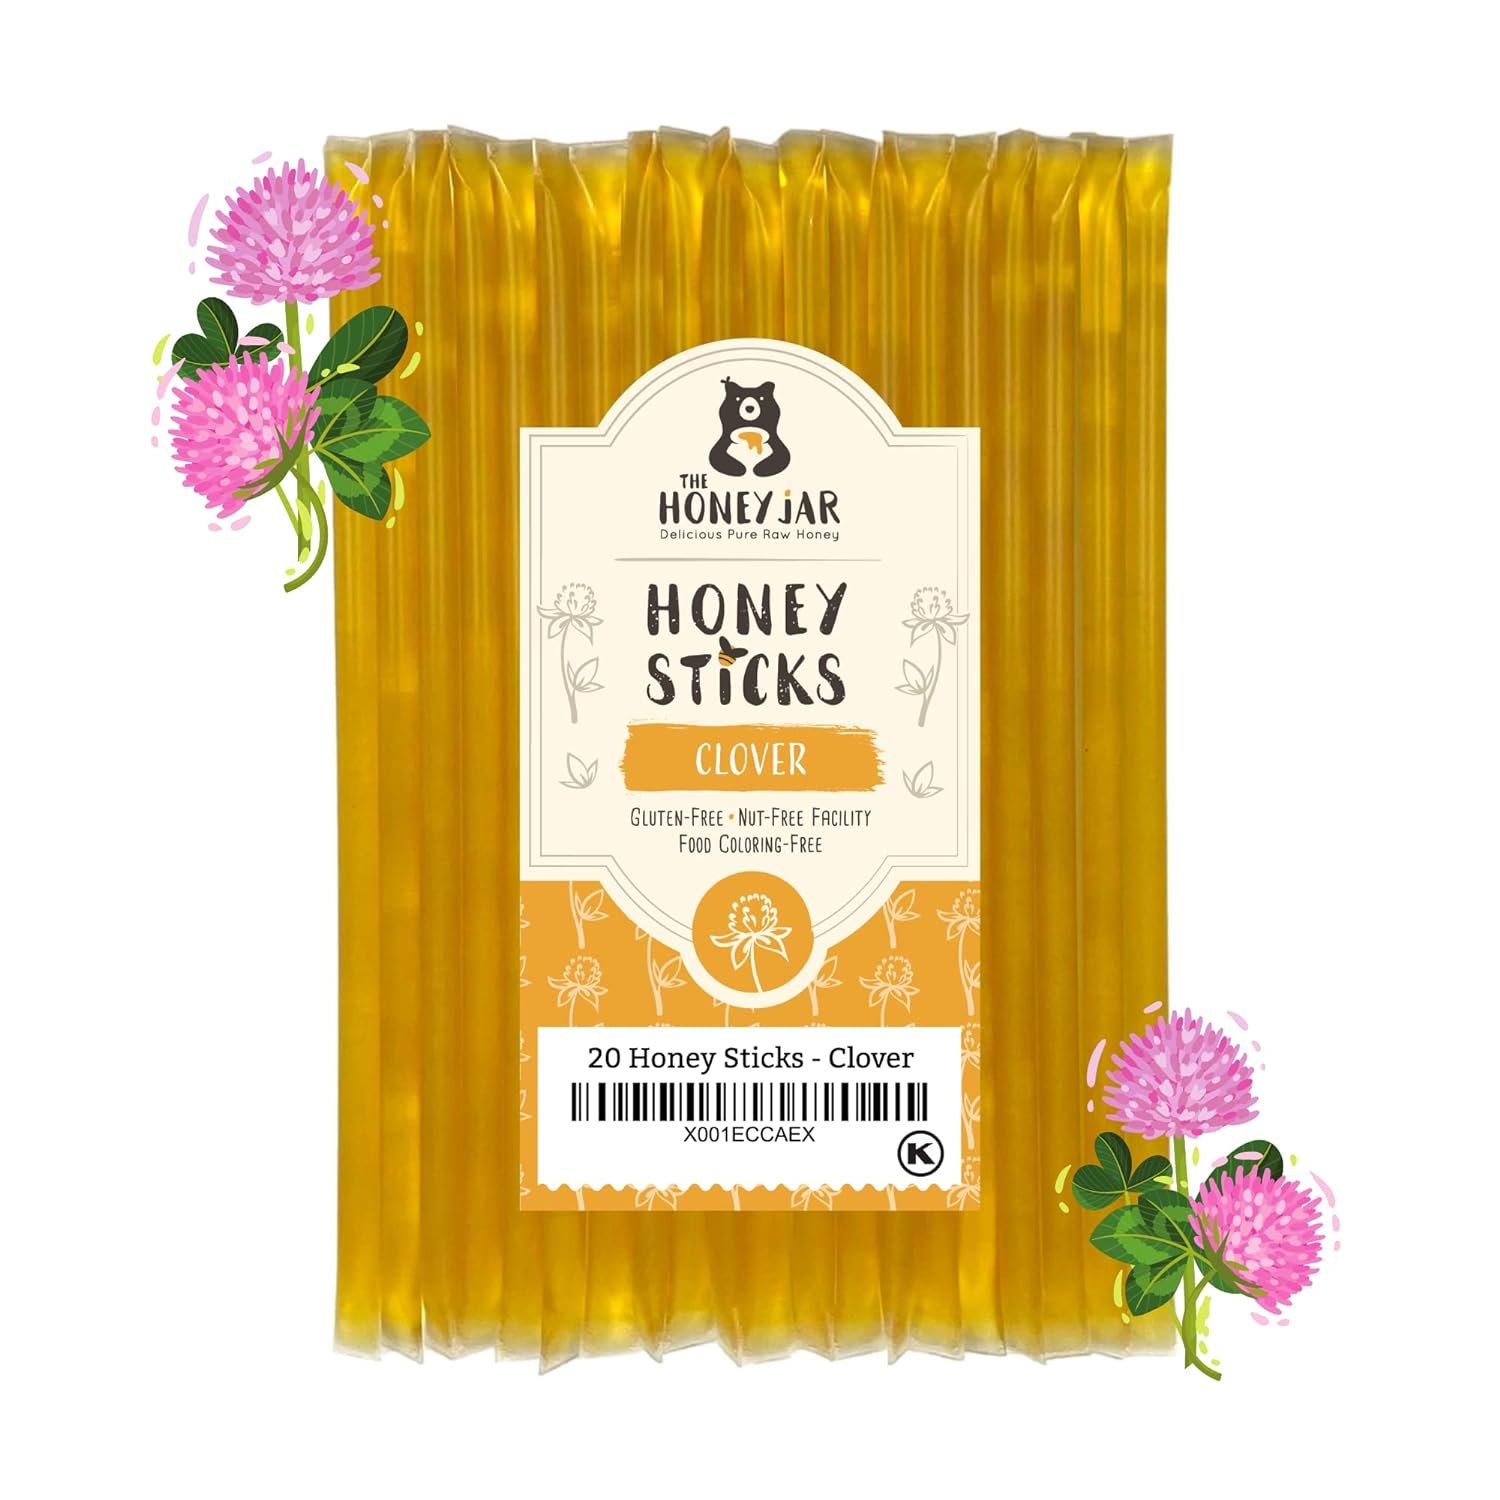 Honey sticks